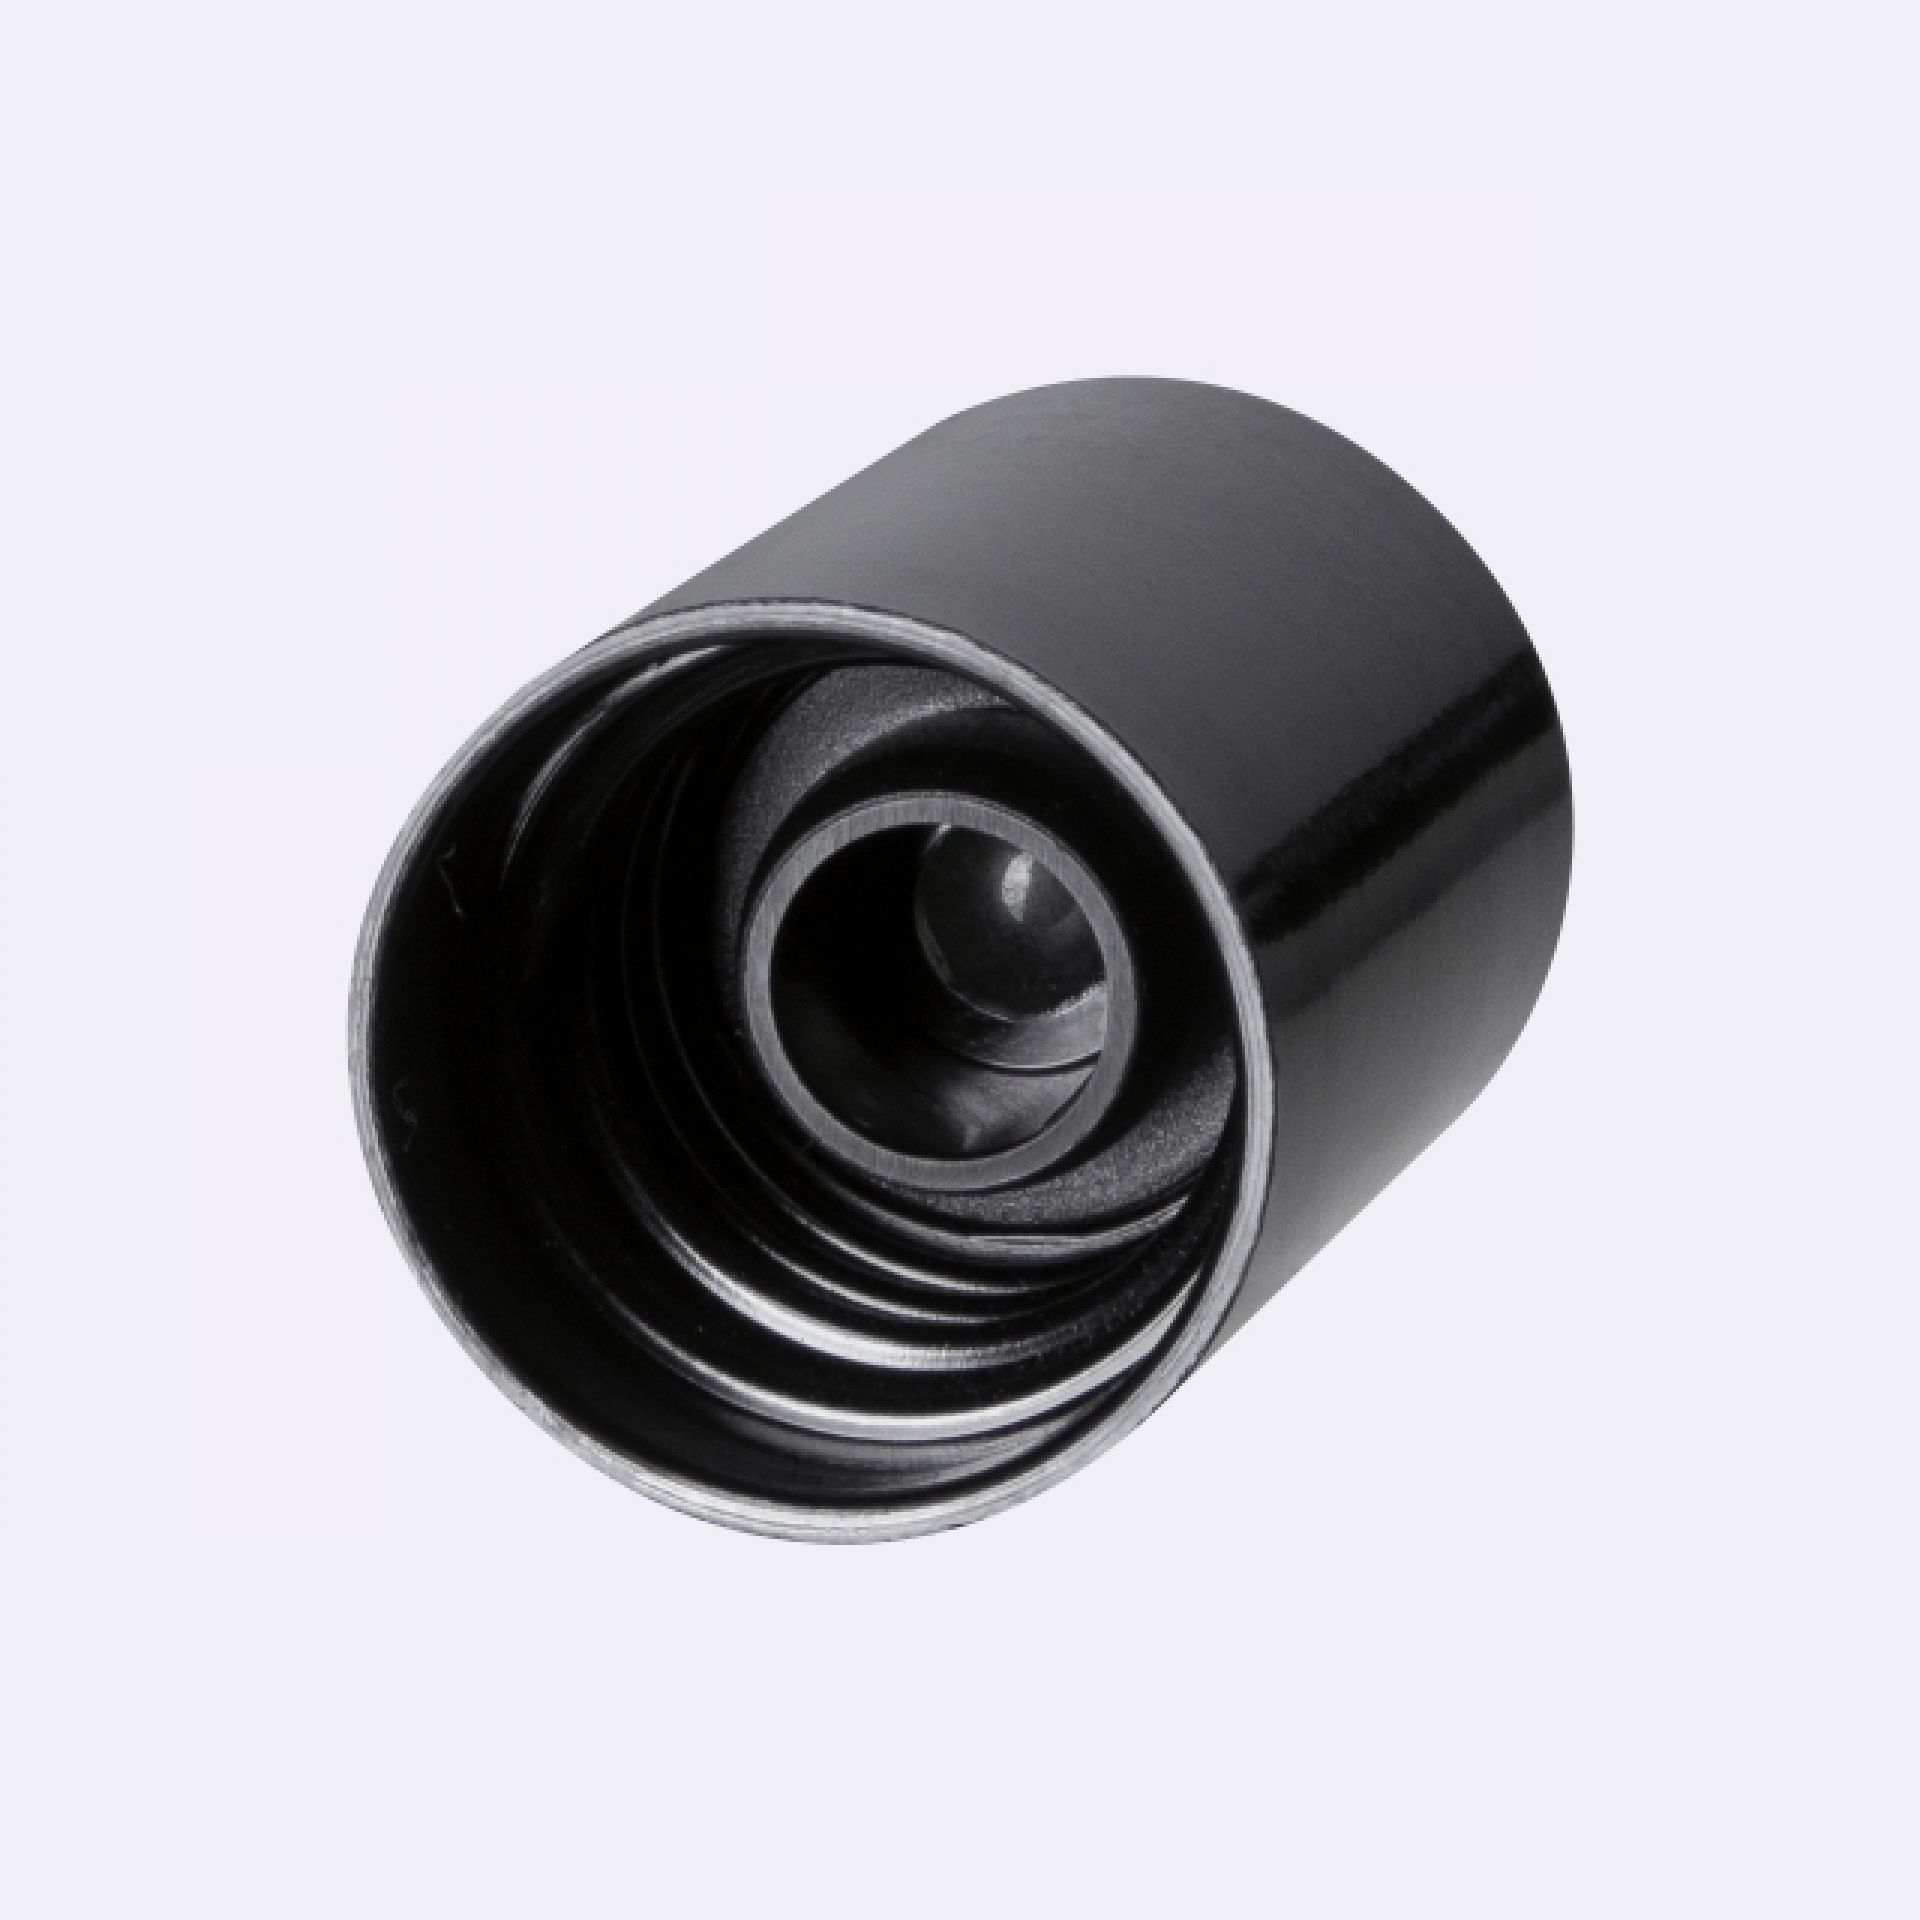 Roll-on cap DIN18, Urea, black fitment, polished glass ball, black cap (Orion)